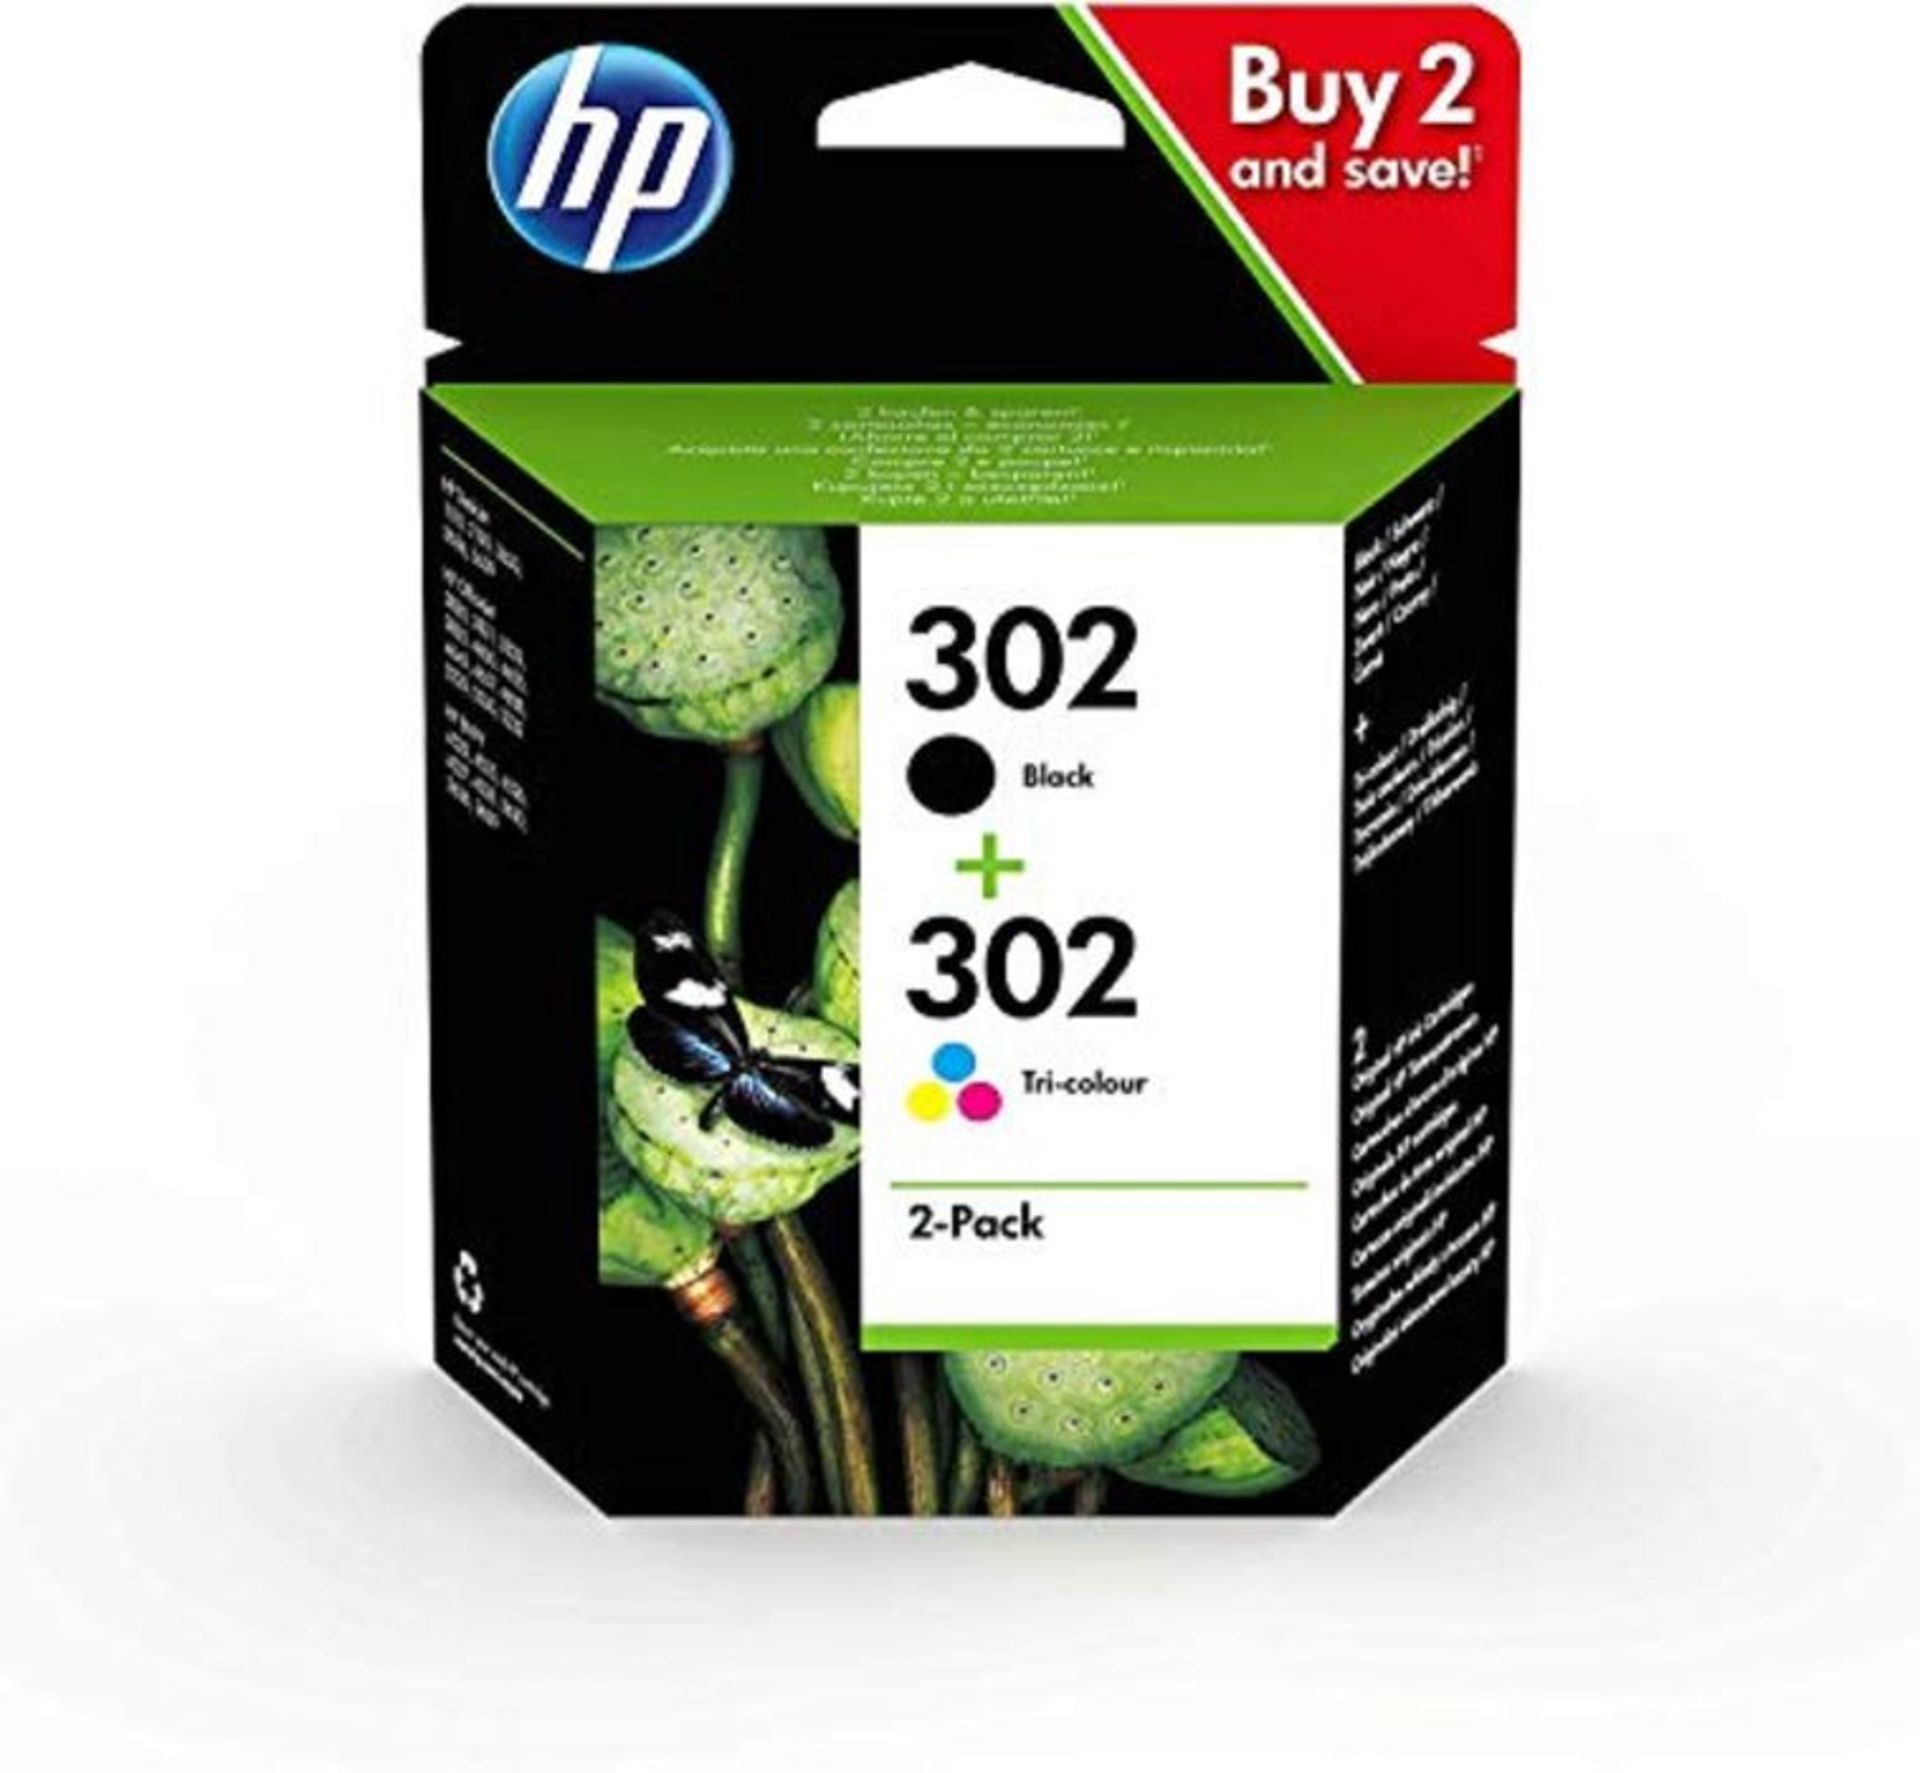 HP X4D37AE 302 Original Ink Cartridges, Black and Tri-color, Multipack